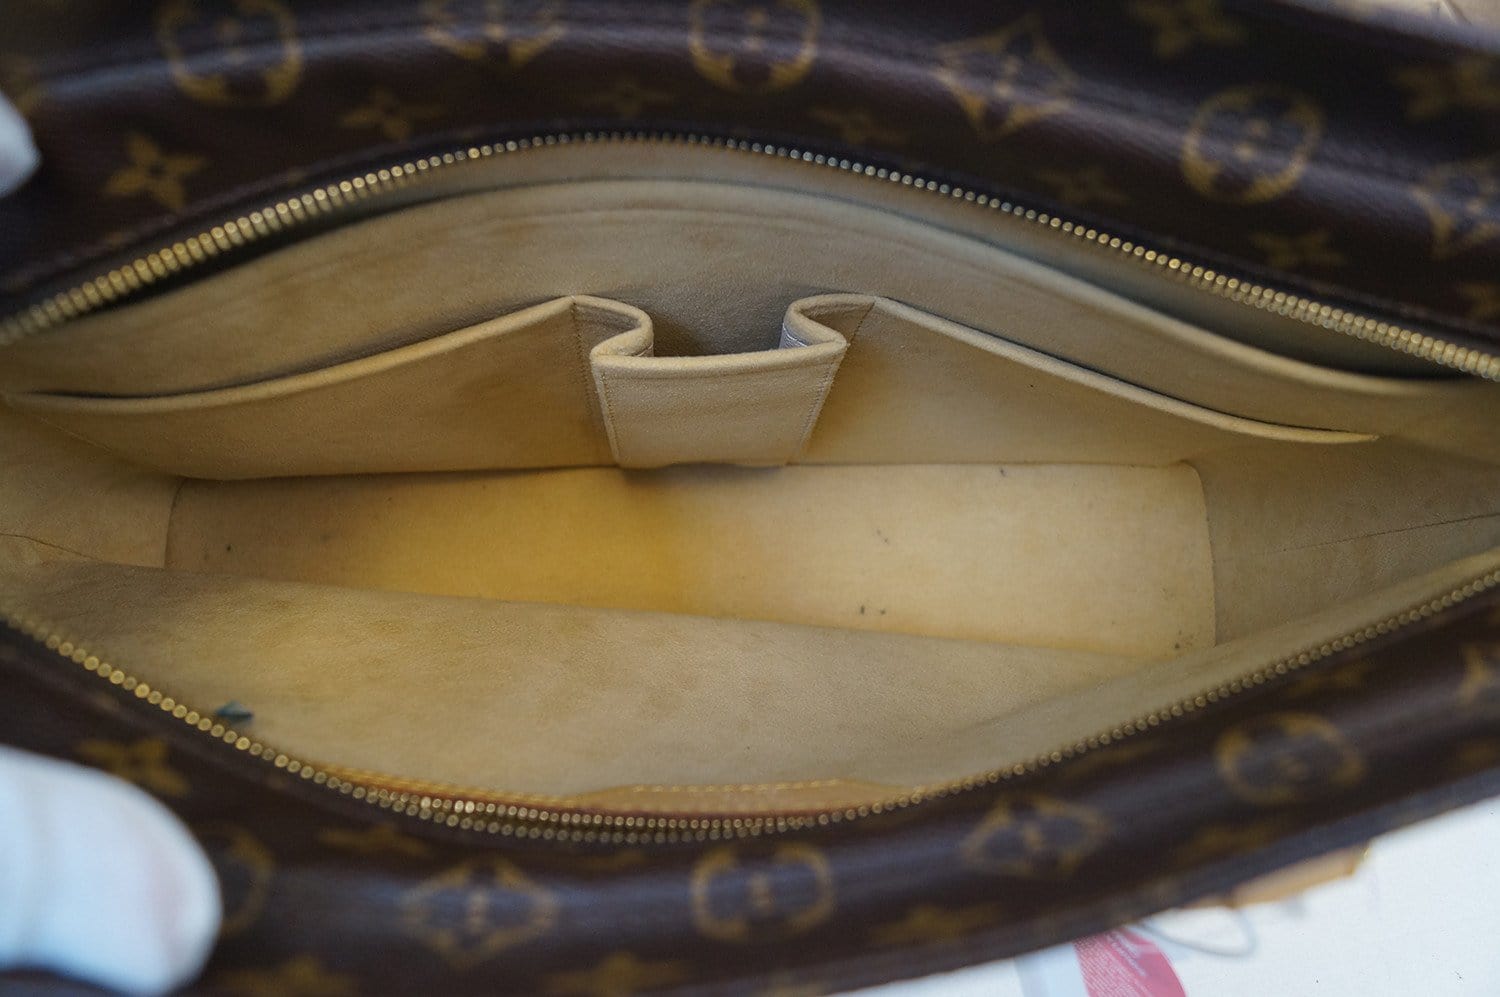 ❌❌❌SOLD❌❌❌ LV LUCO tote bag. 💵8️⃣9️⃣5️⃣, shipped. No